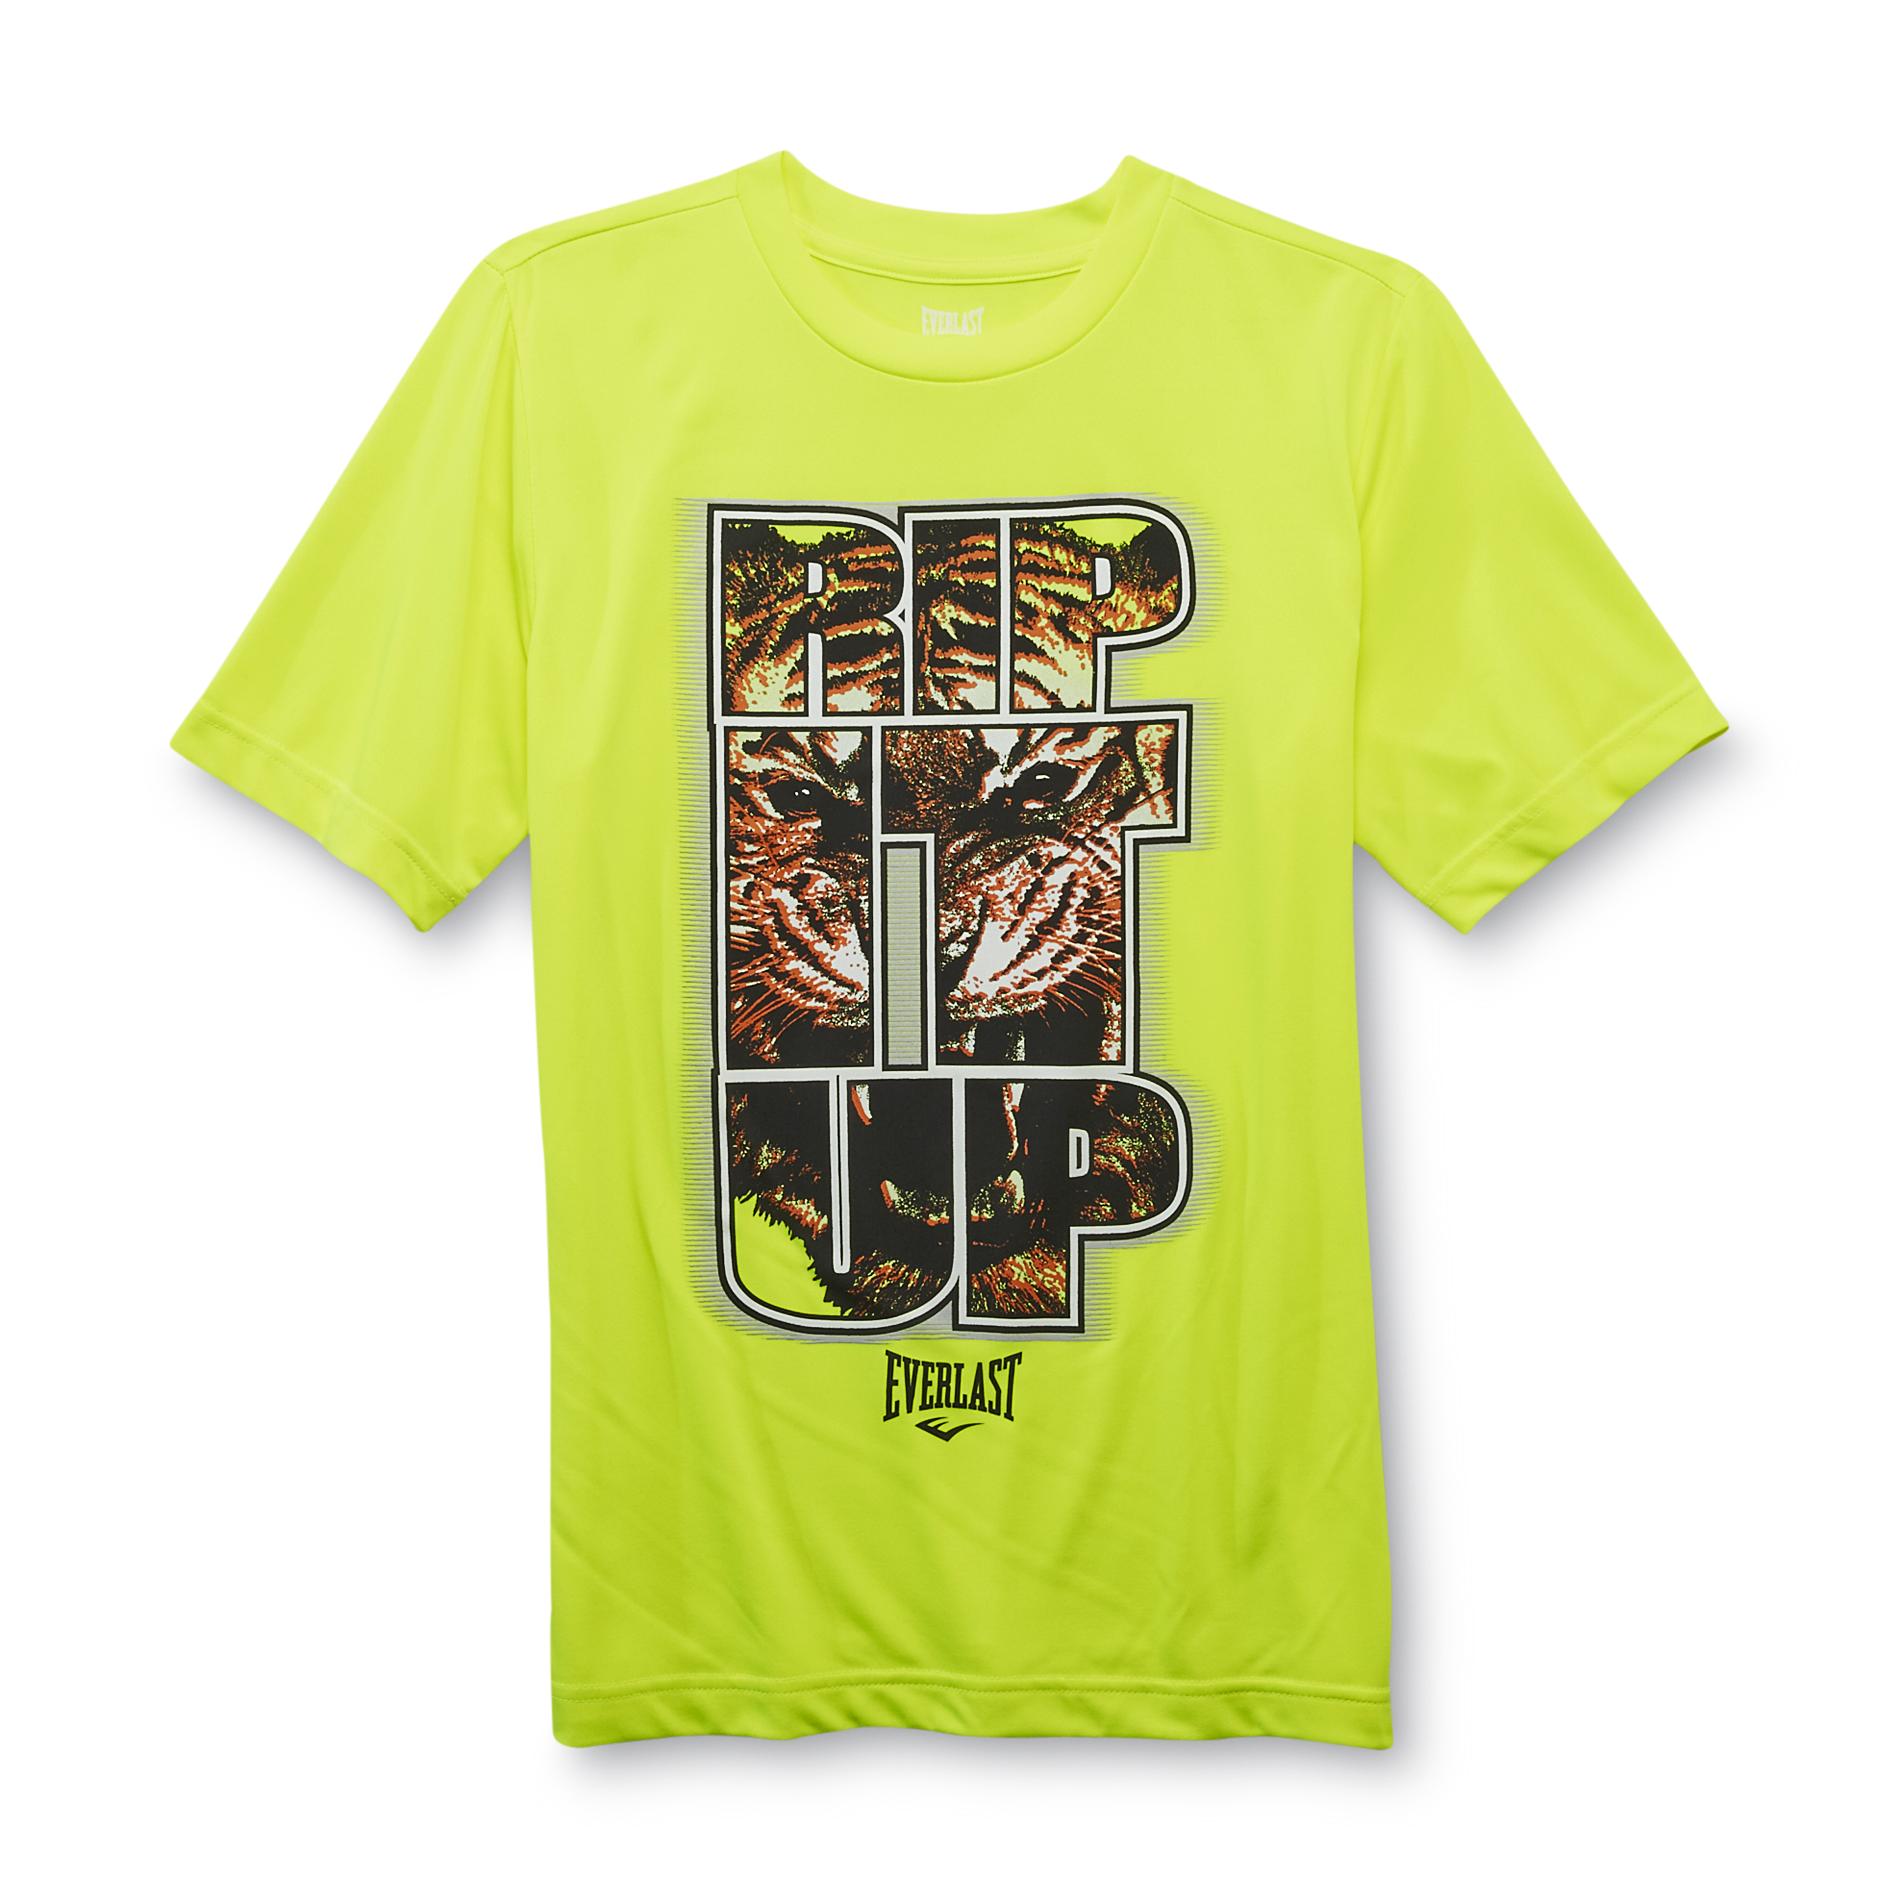 Everlast&reg; Boy's Athletic Graphic T-Shirt - Rip It Up